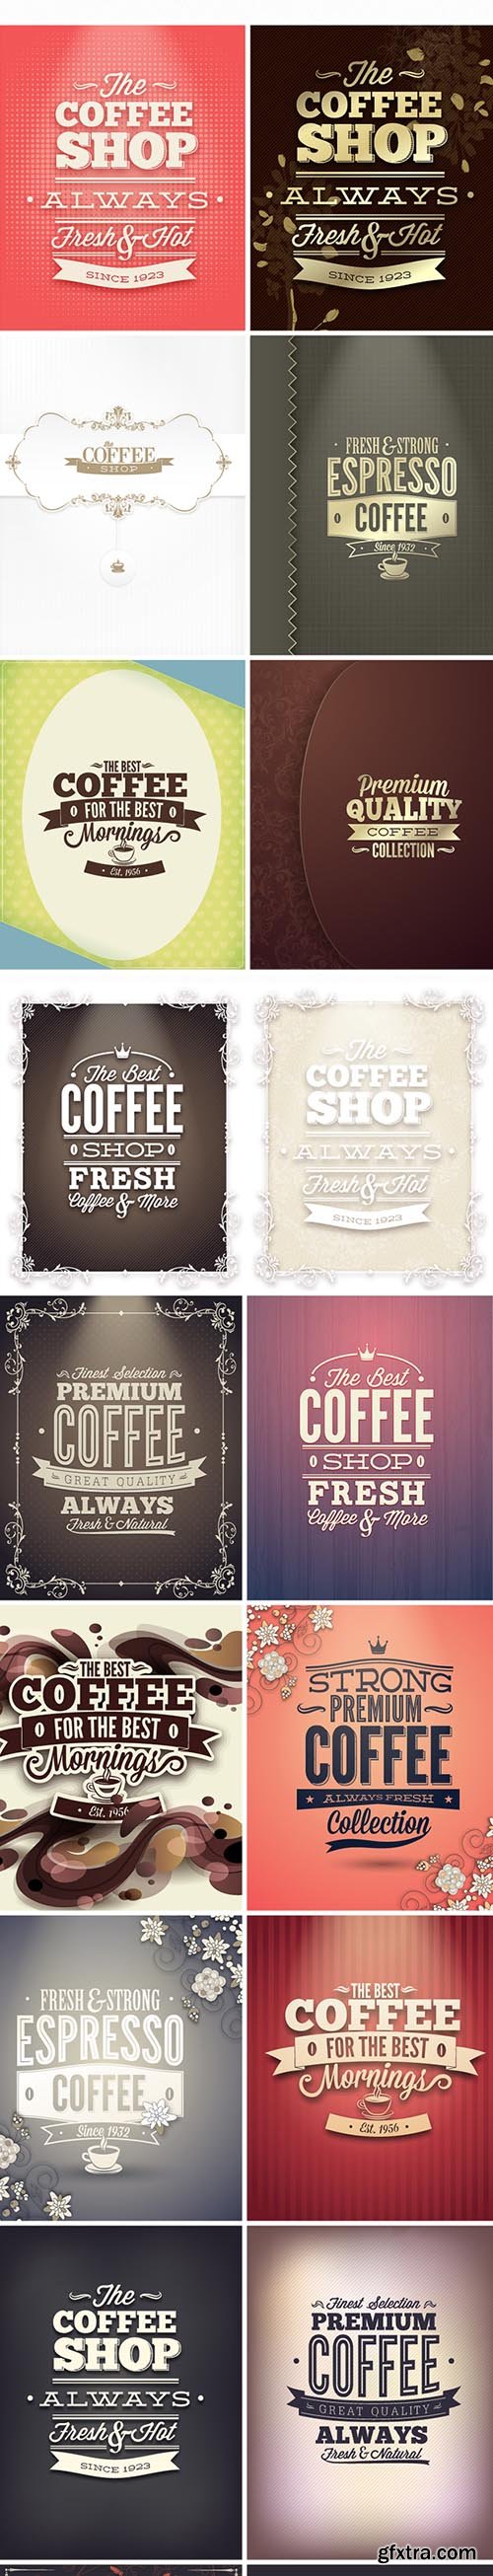 30 Coffee Vector Illustrations